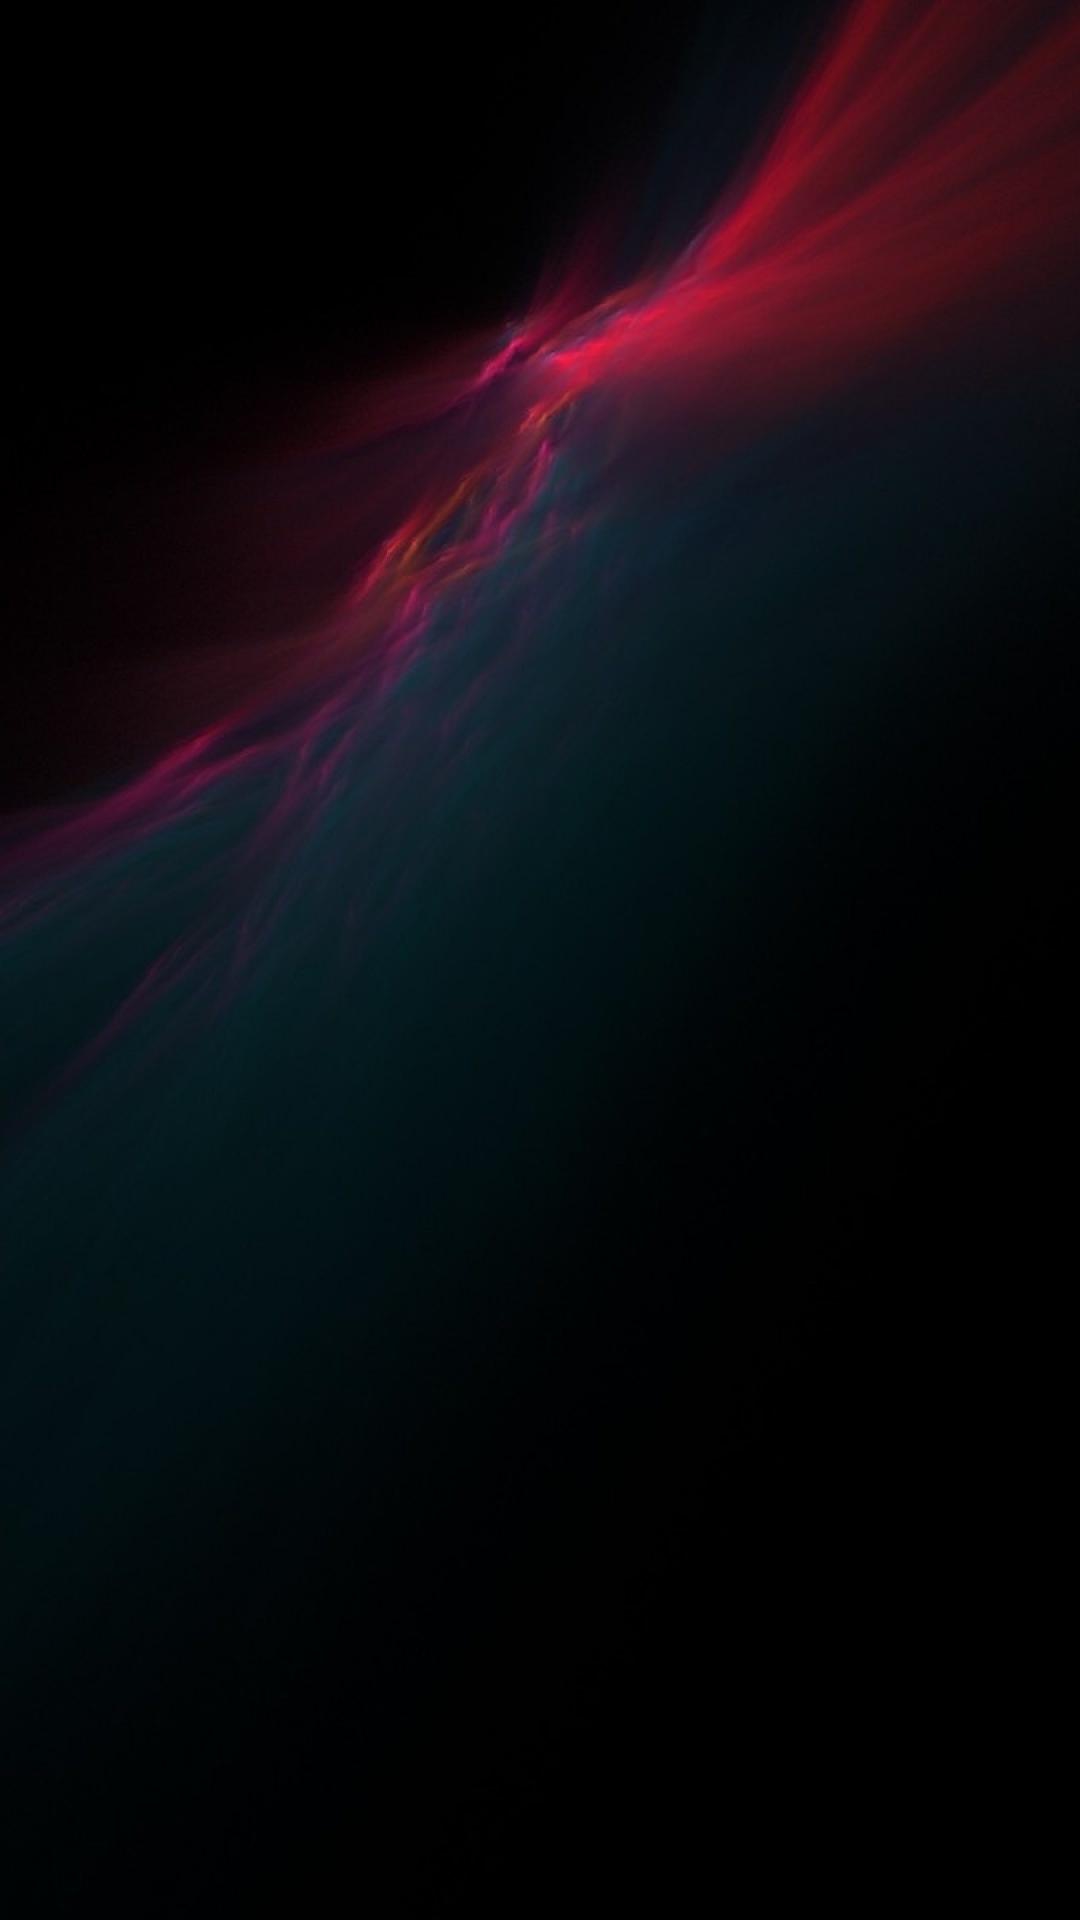 Dark Galaxy Red Nebula IPhone Wallpaper Wallpaper, iPhone Wallpaper